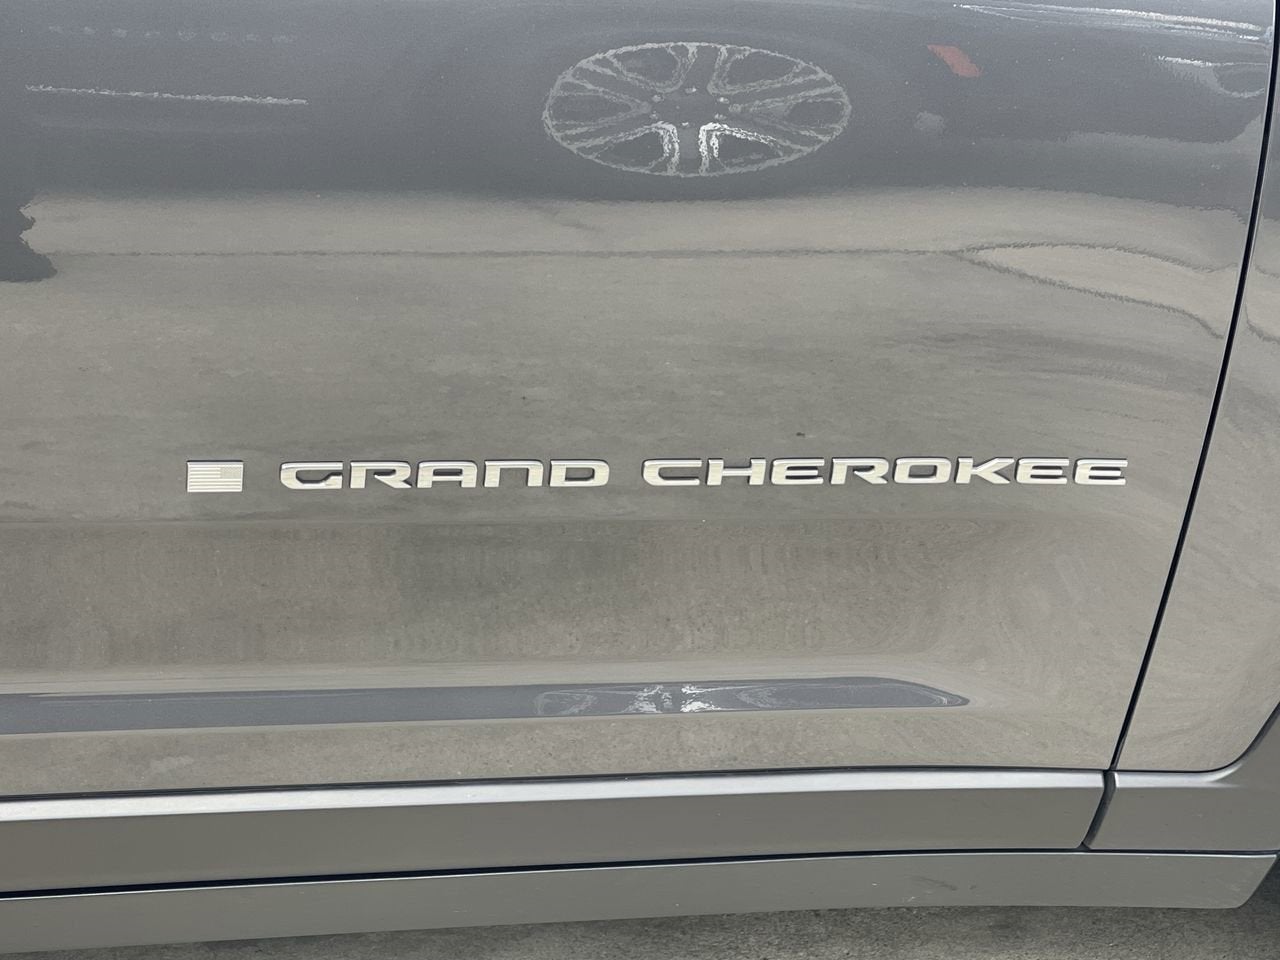 2022 Jeep Grand Cherokee Limited 4x2